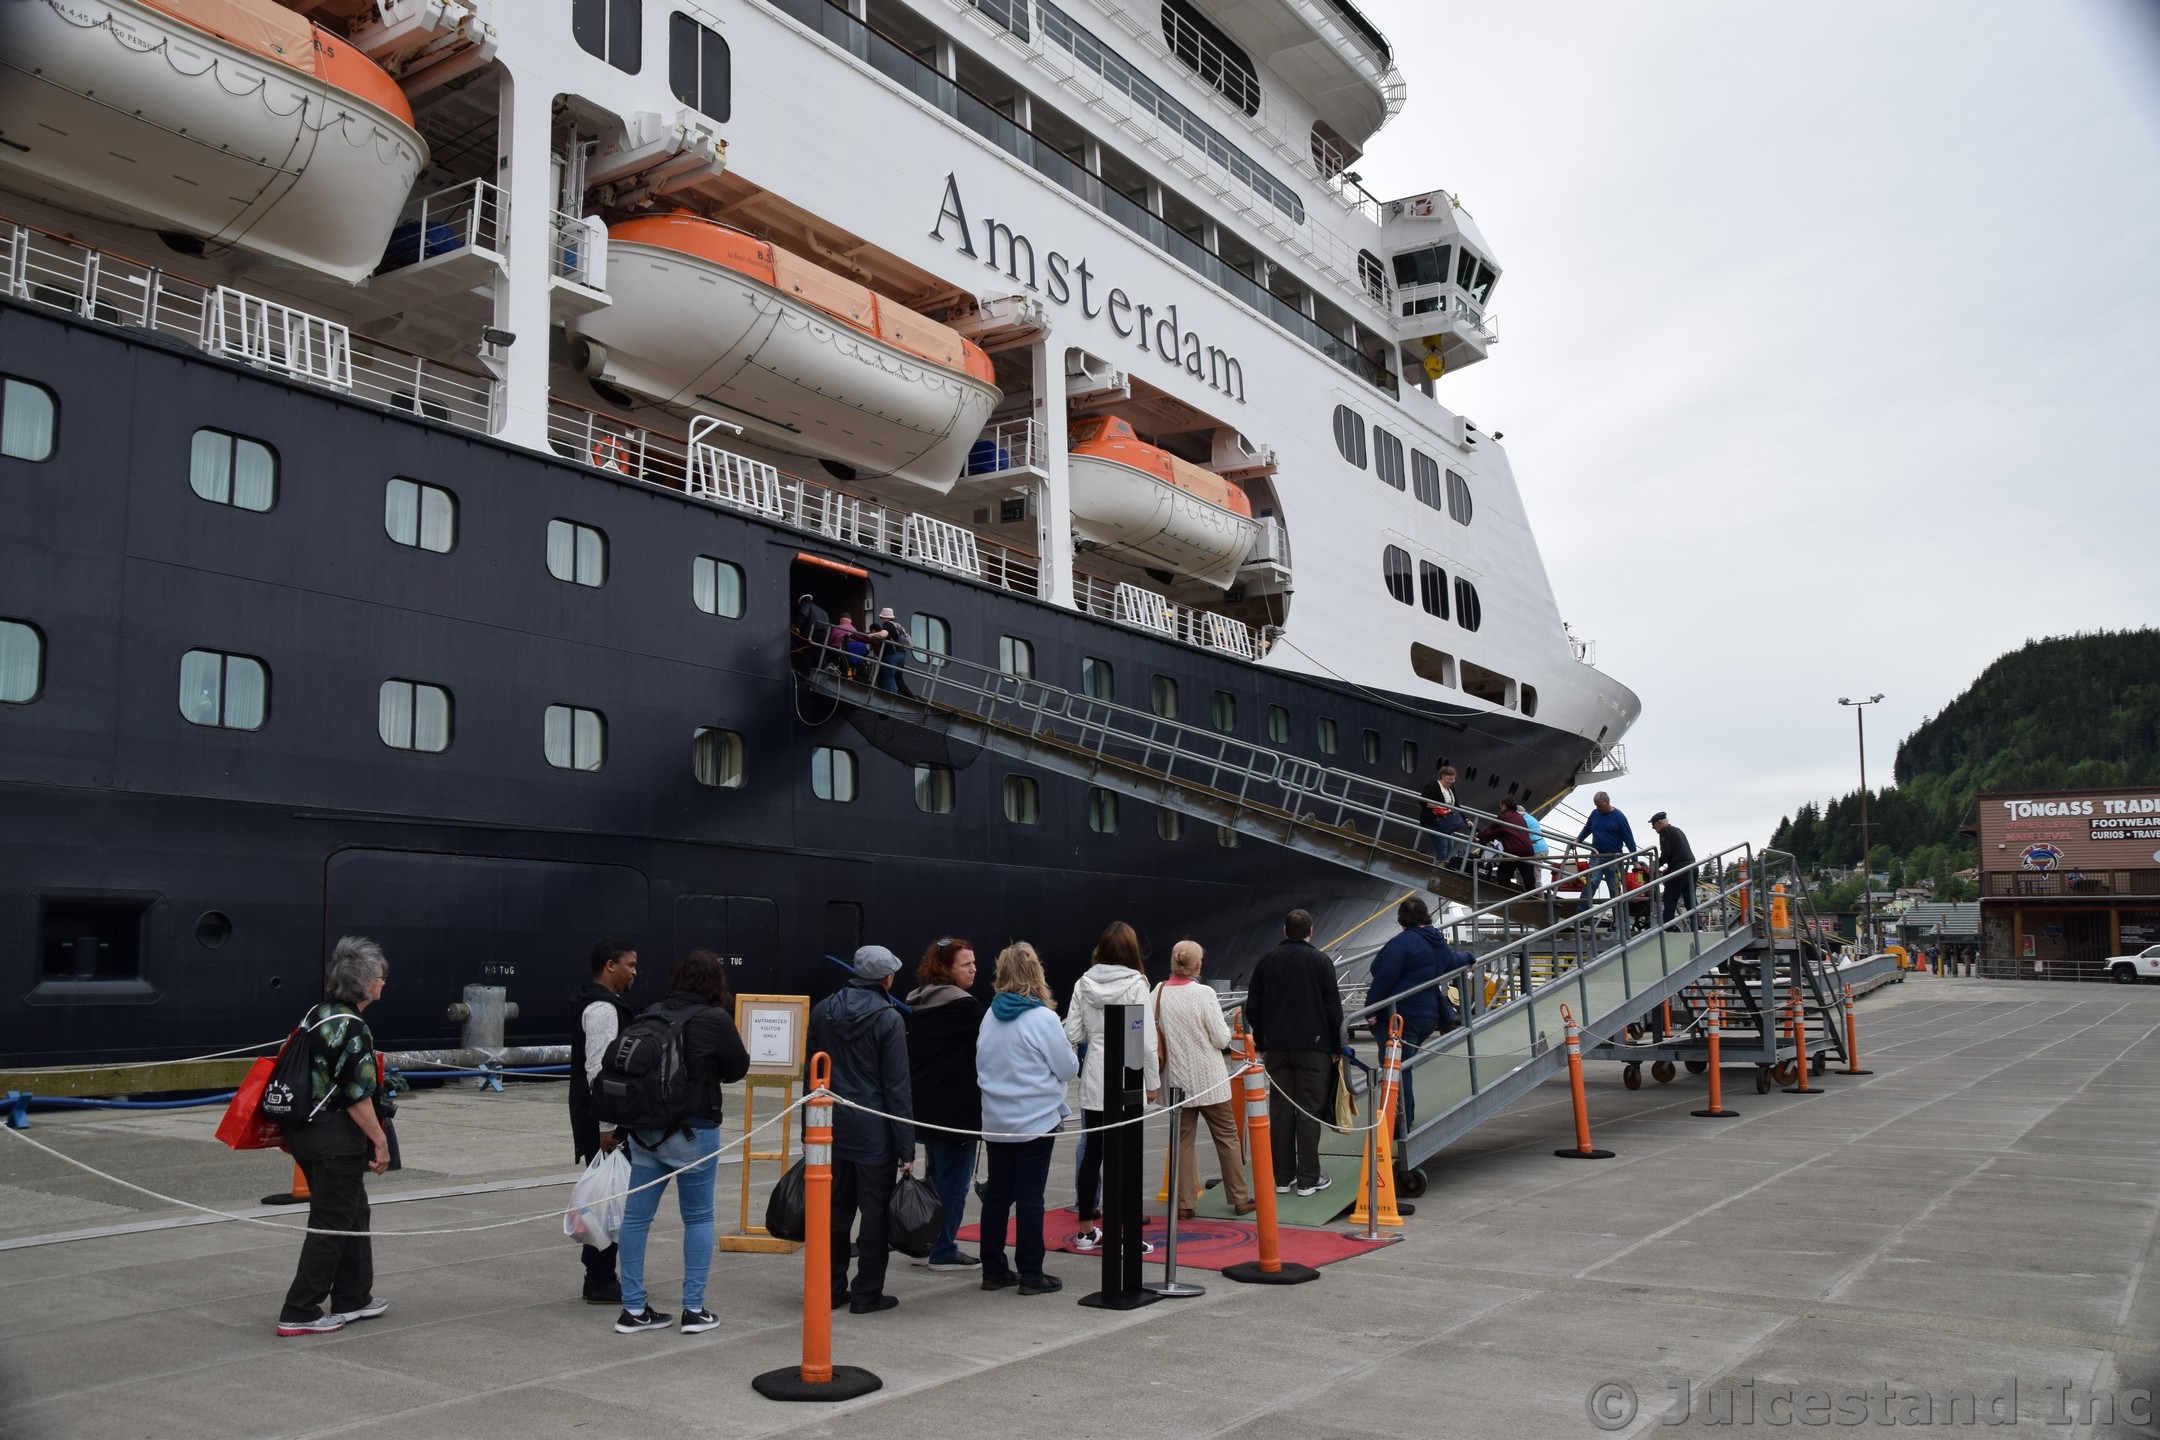 Gangway at Ketchikan Alaska Cruise Terminal to Board MS Amsterdam
